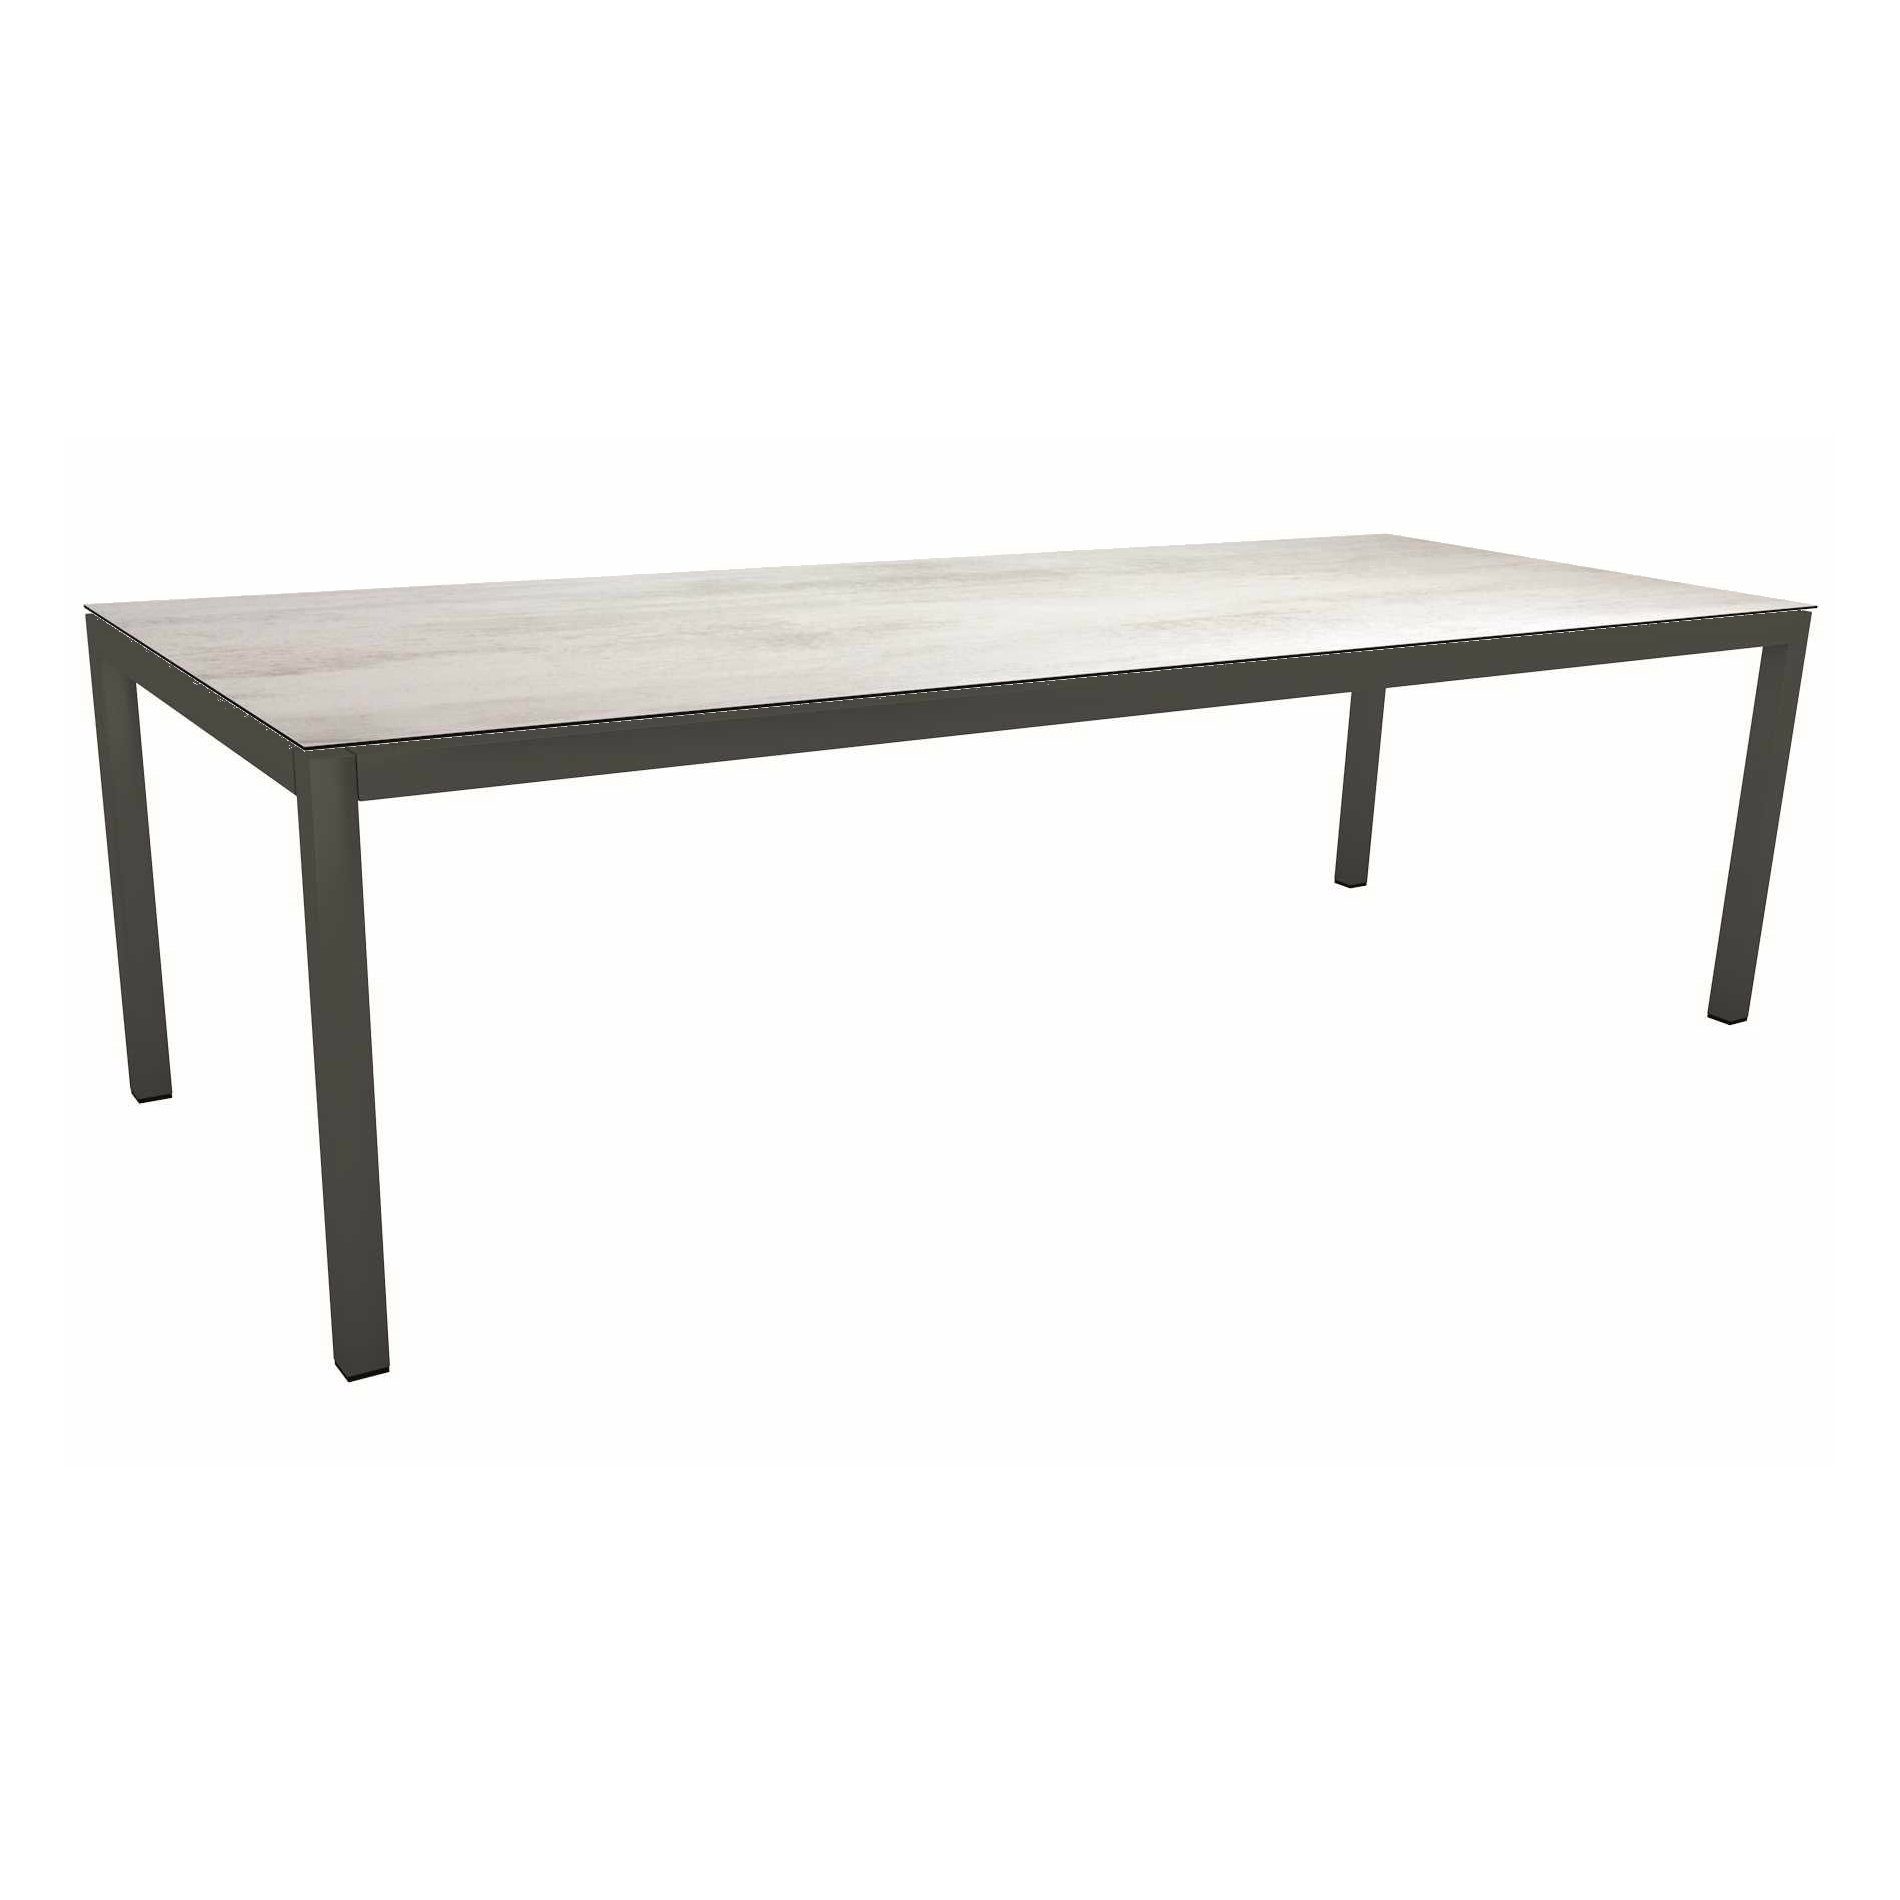 Stern Tischsystem Gartentisch, Gestell Aluminium anthrazit, Tischplatte HPL Zement hell, Maße: 250x100 cm